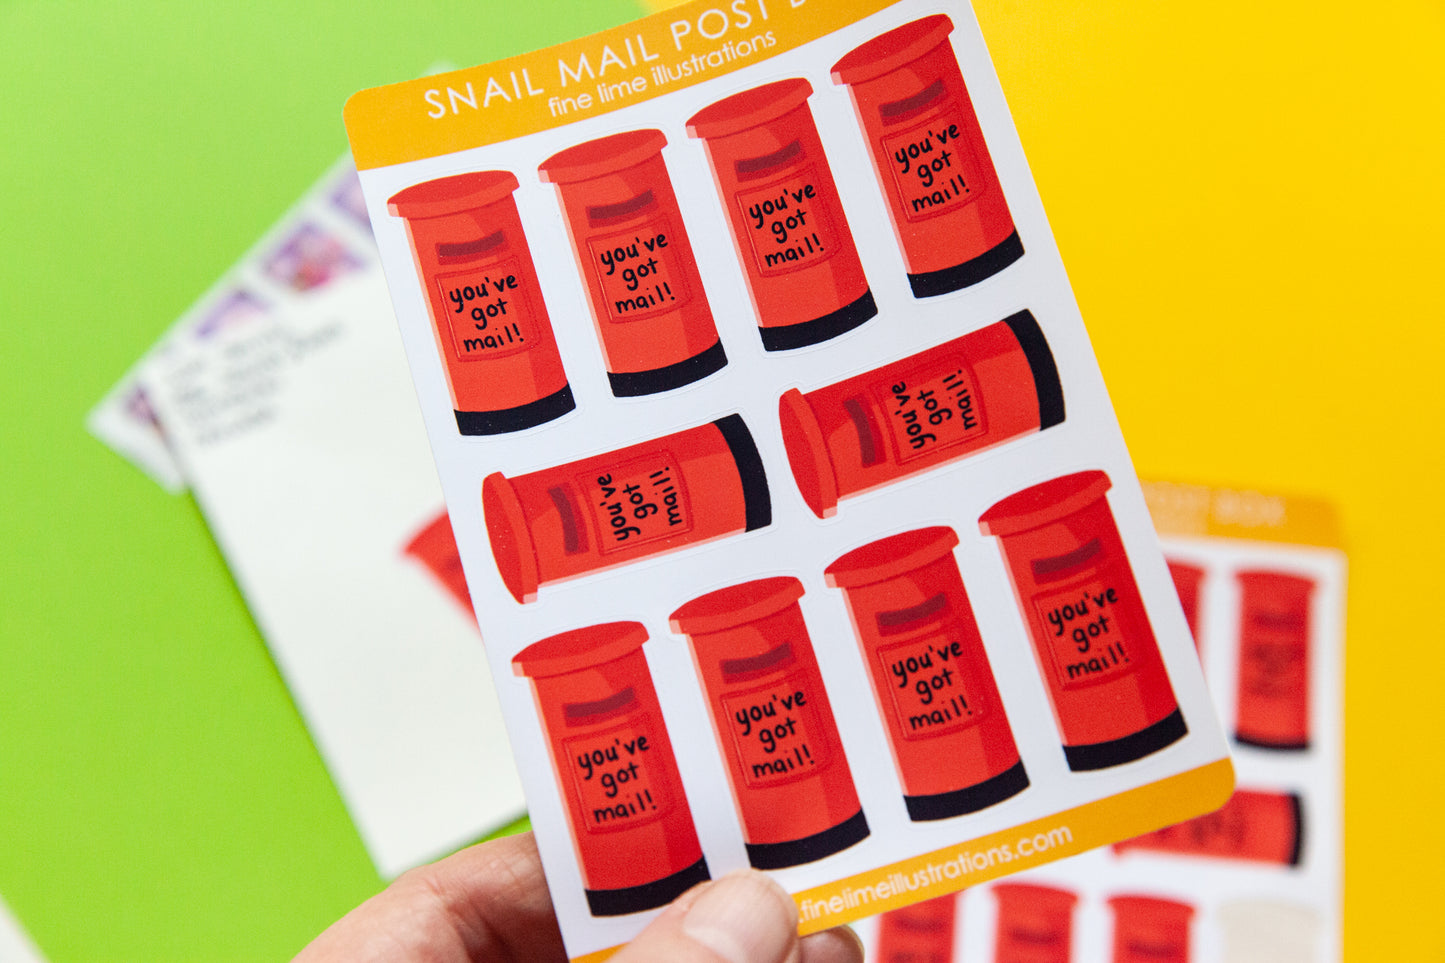 Snail Mail Post Box Sticker Sheet